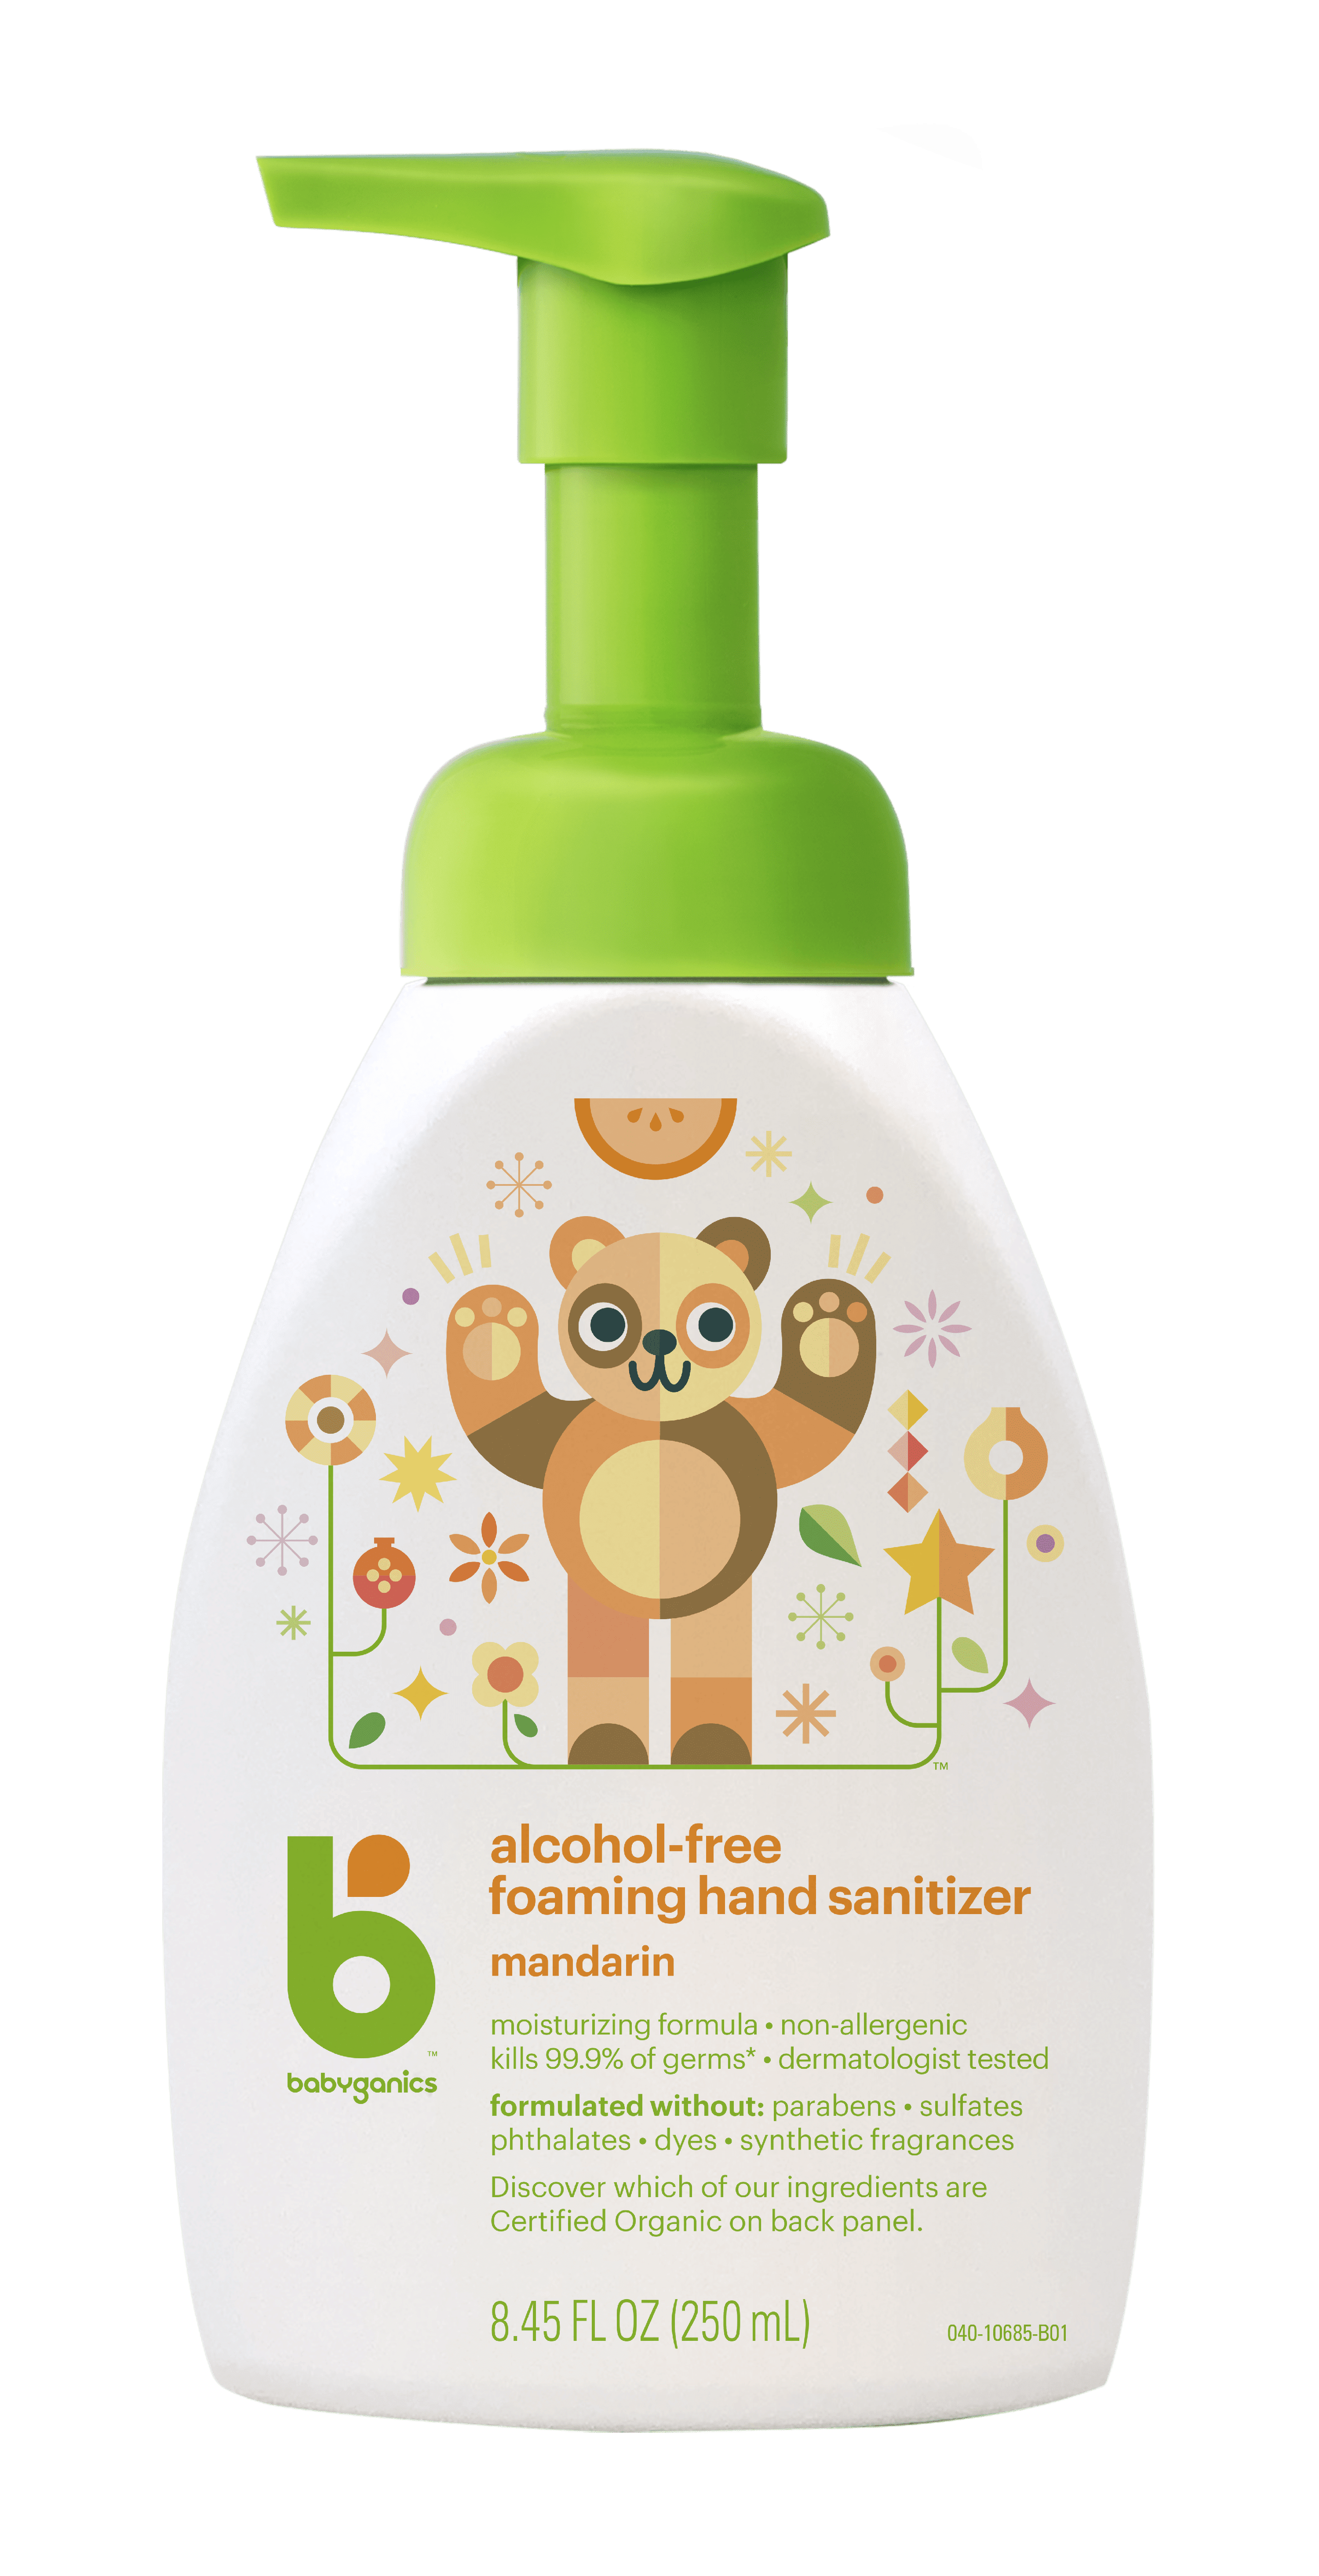 babyganics foaming hand sanitizer